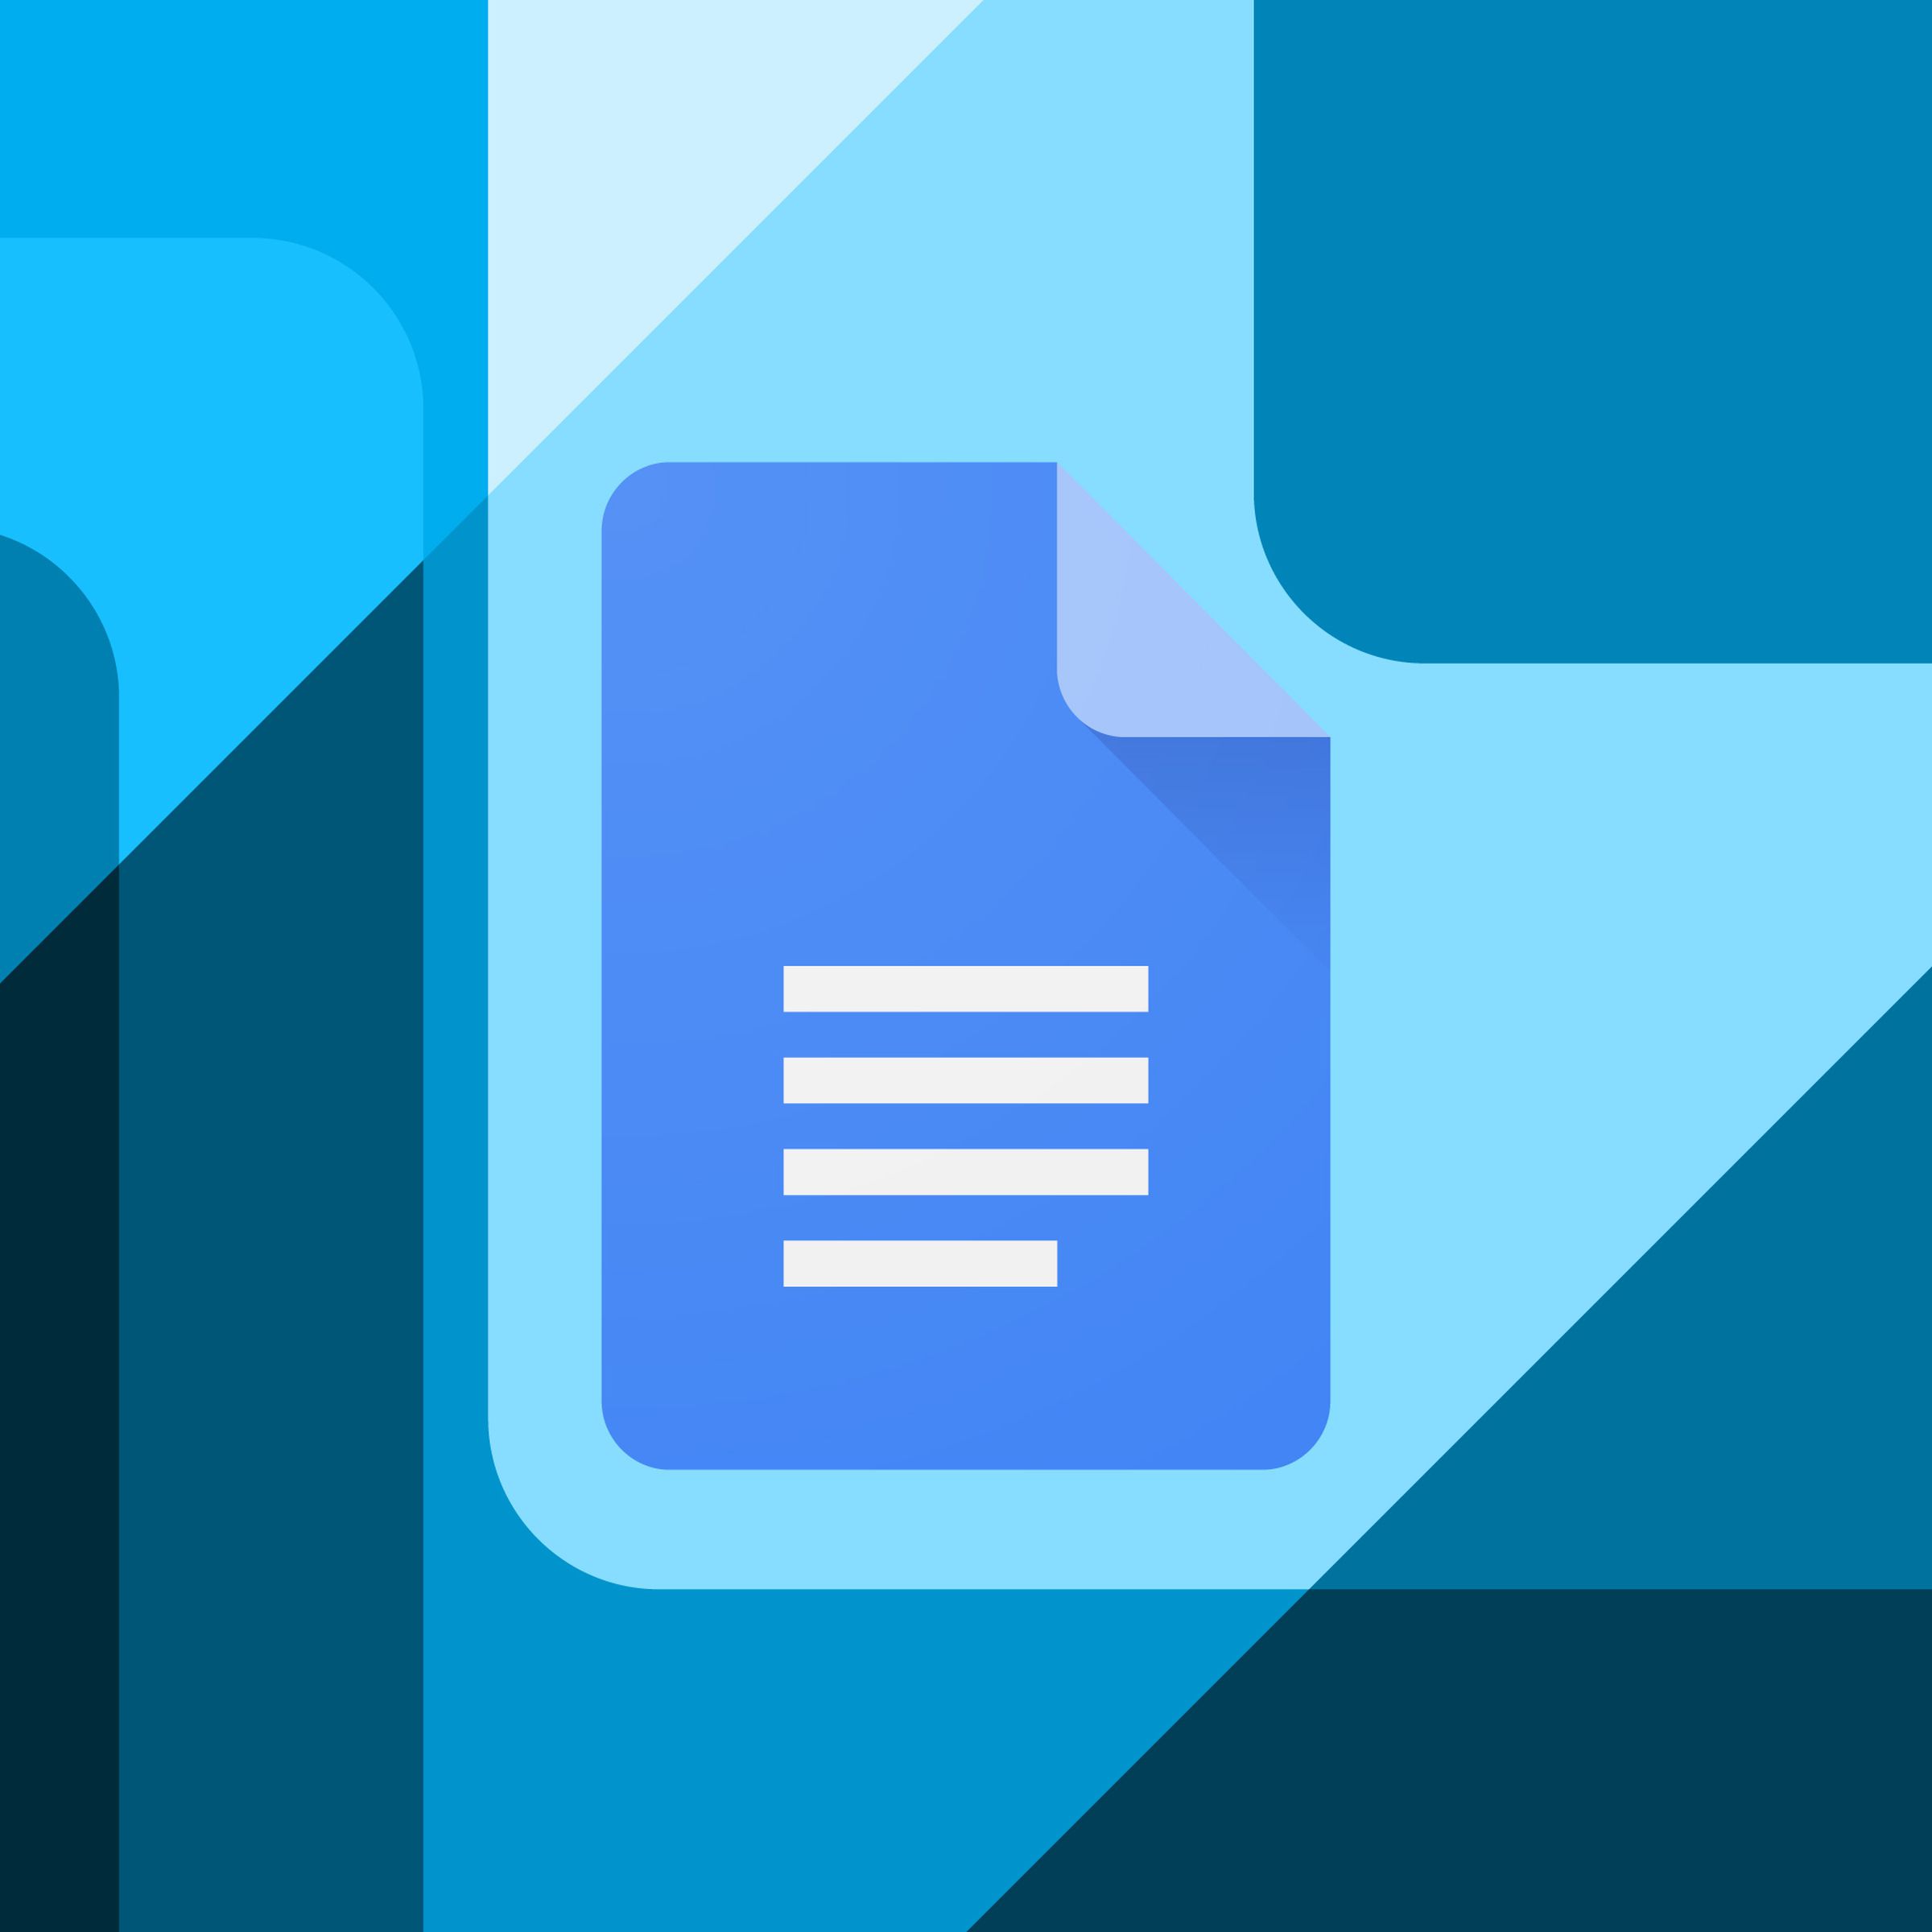 Illustration of the Google Docs logo on a blue background.